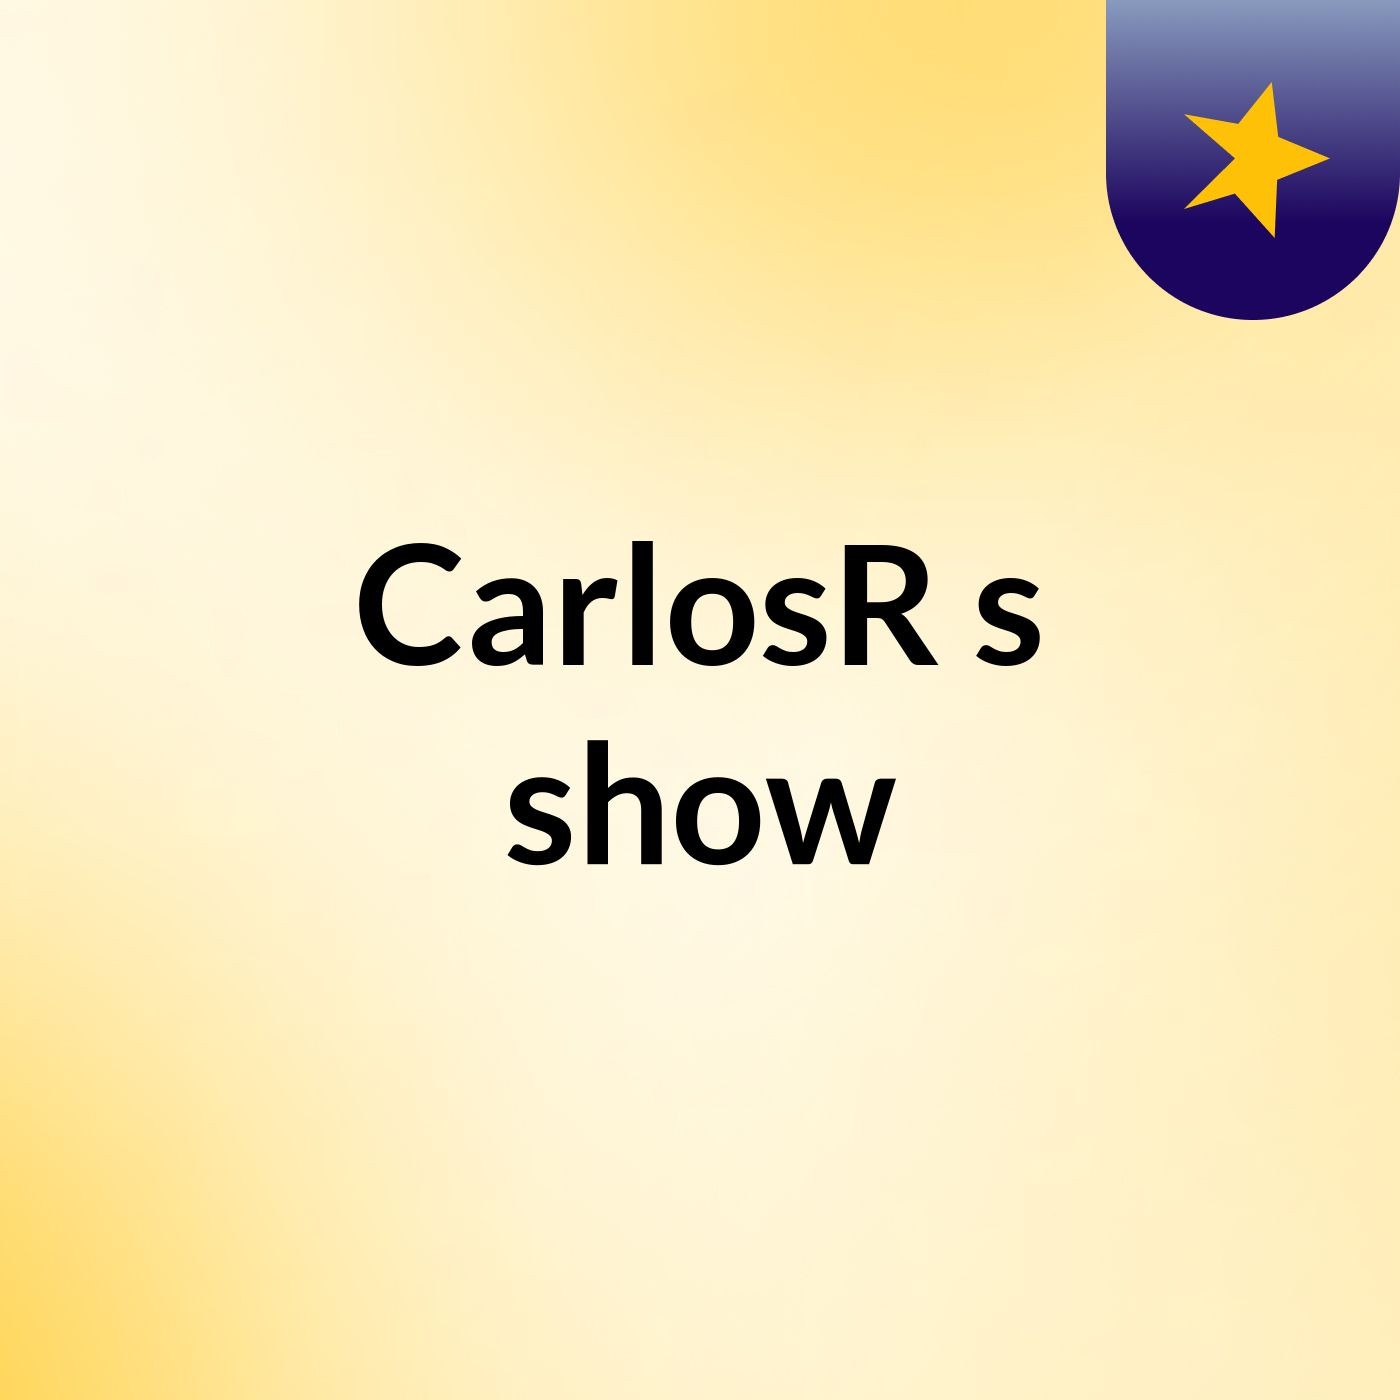 CarlosR's show